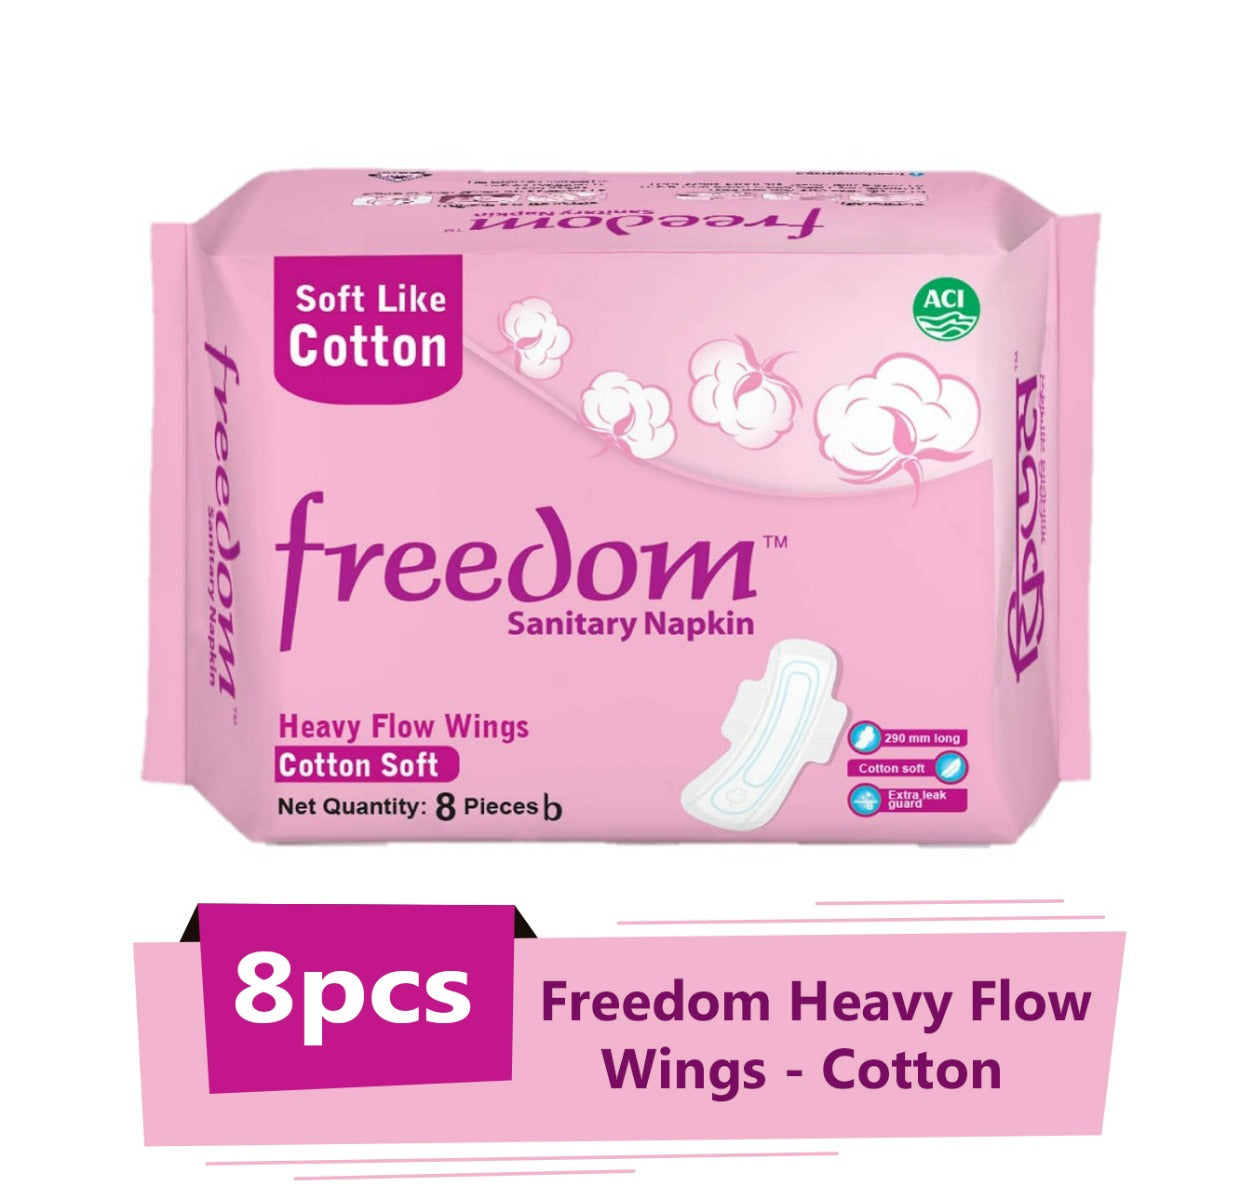 Freedom Heavy Flow Wings - Cotton (8pcs)